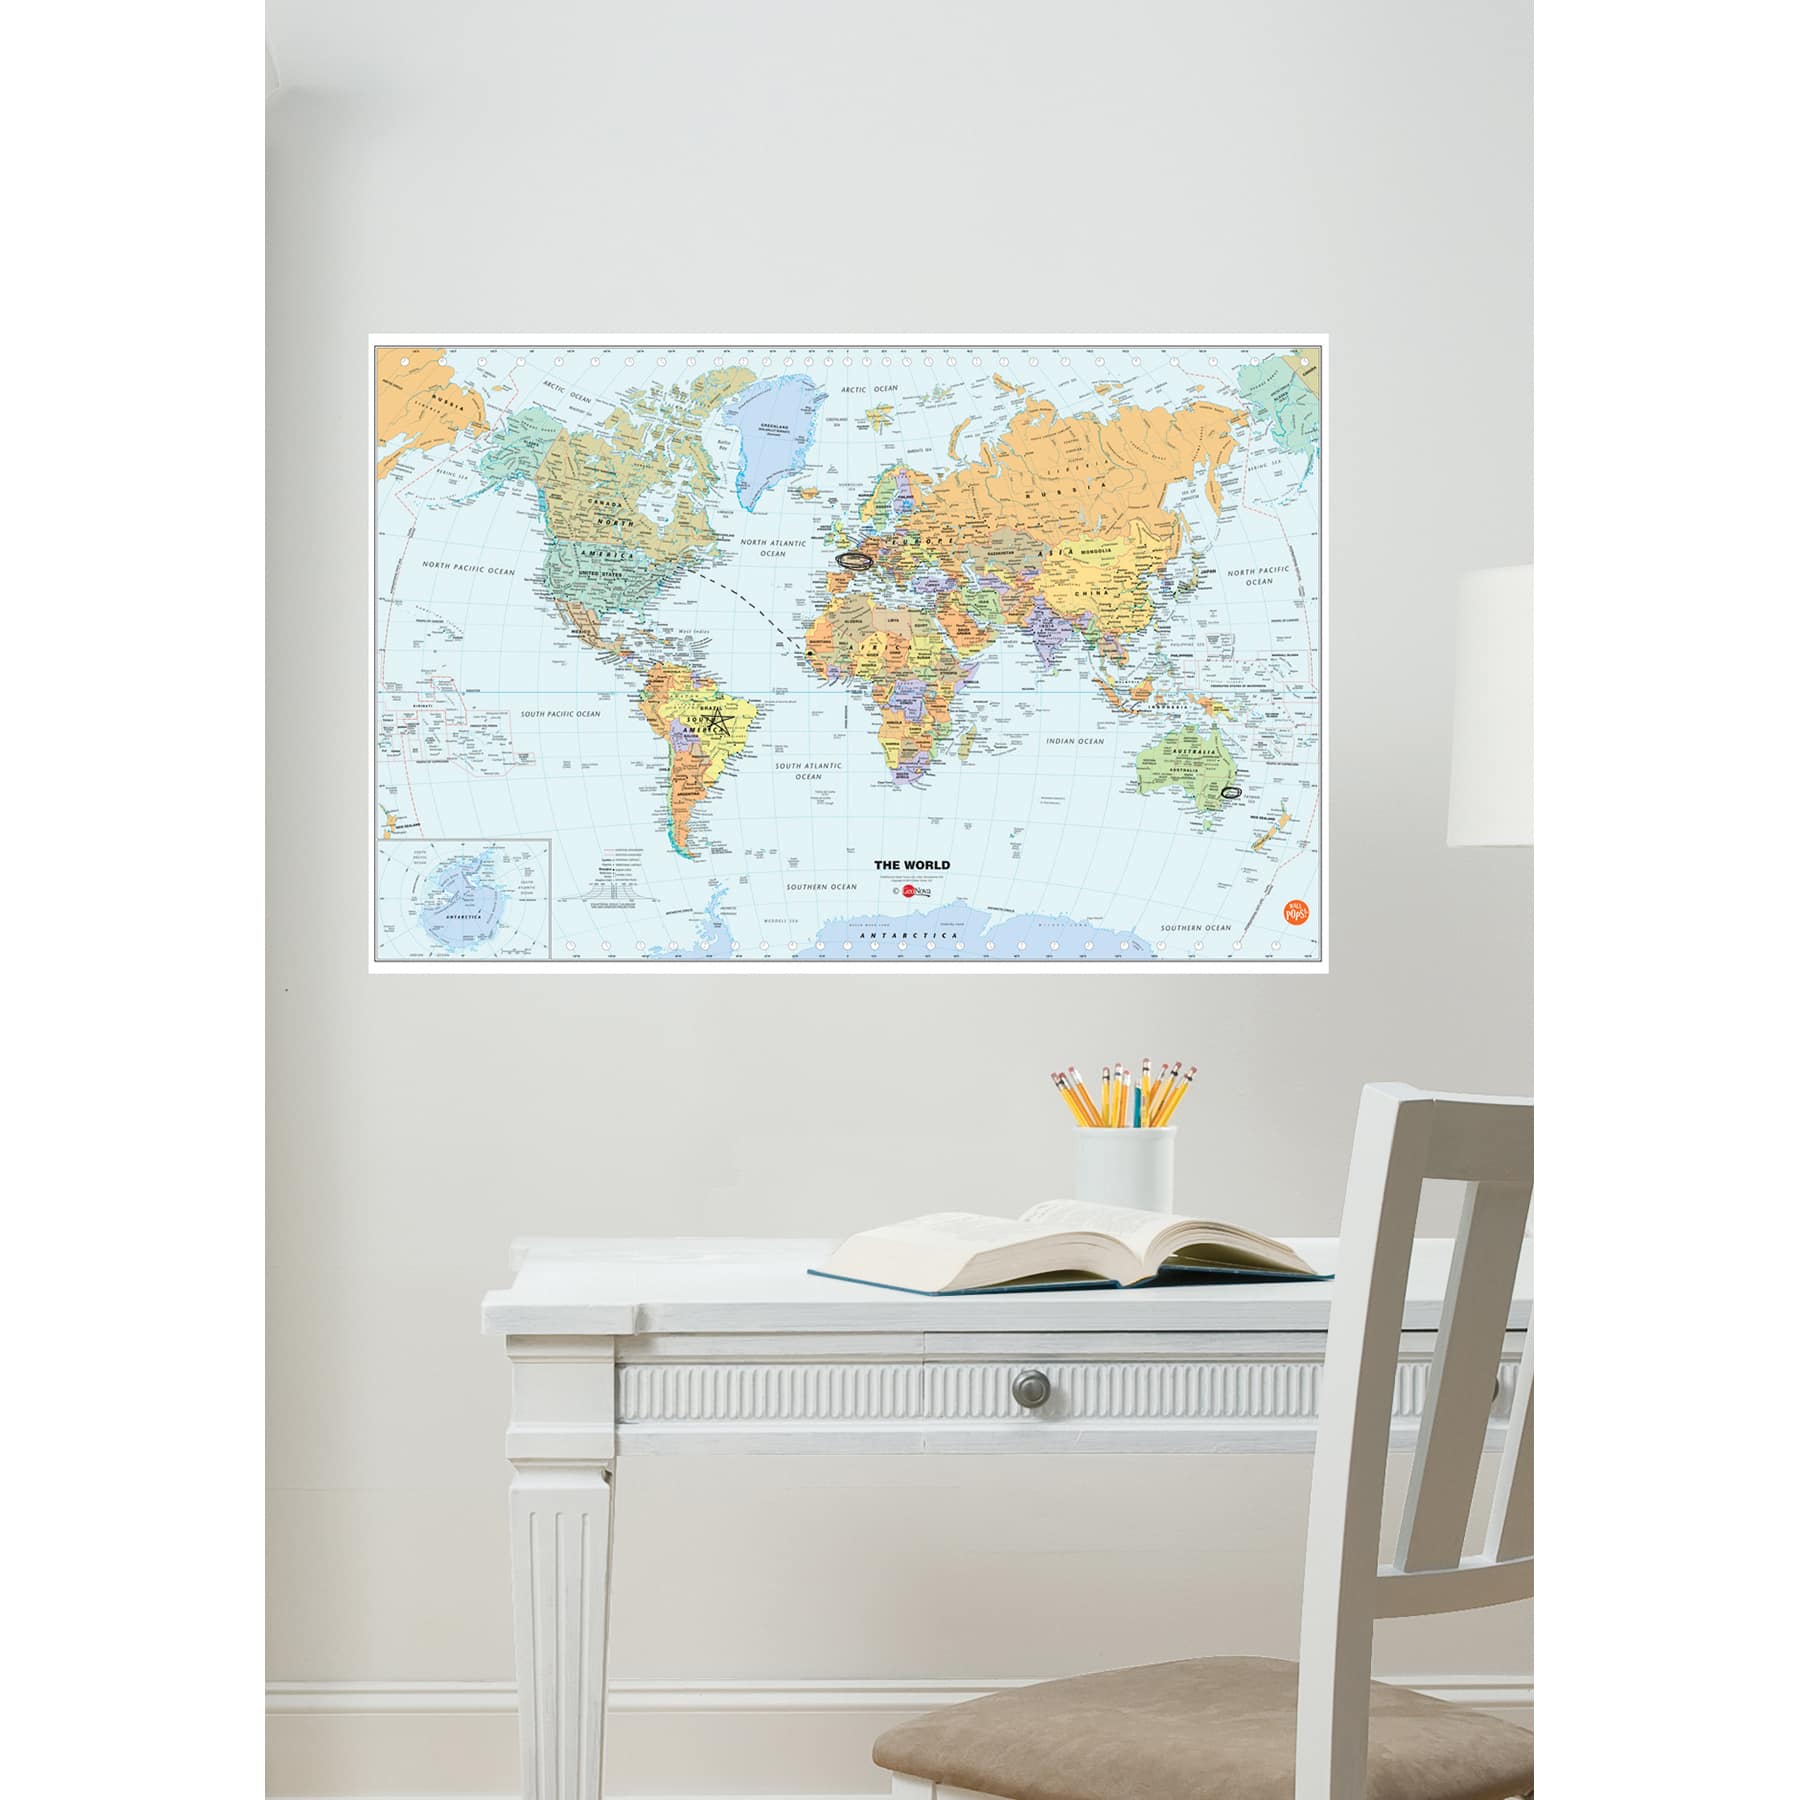 WallPops Dry Erase World Map